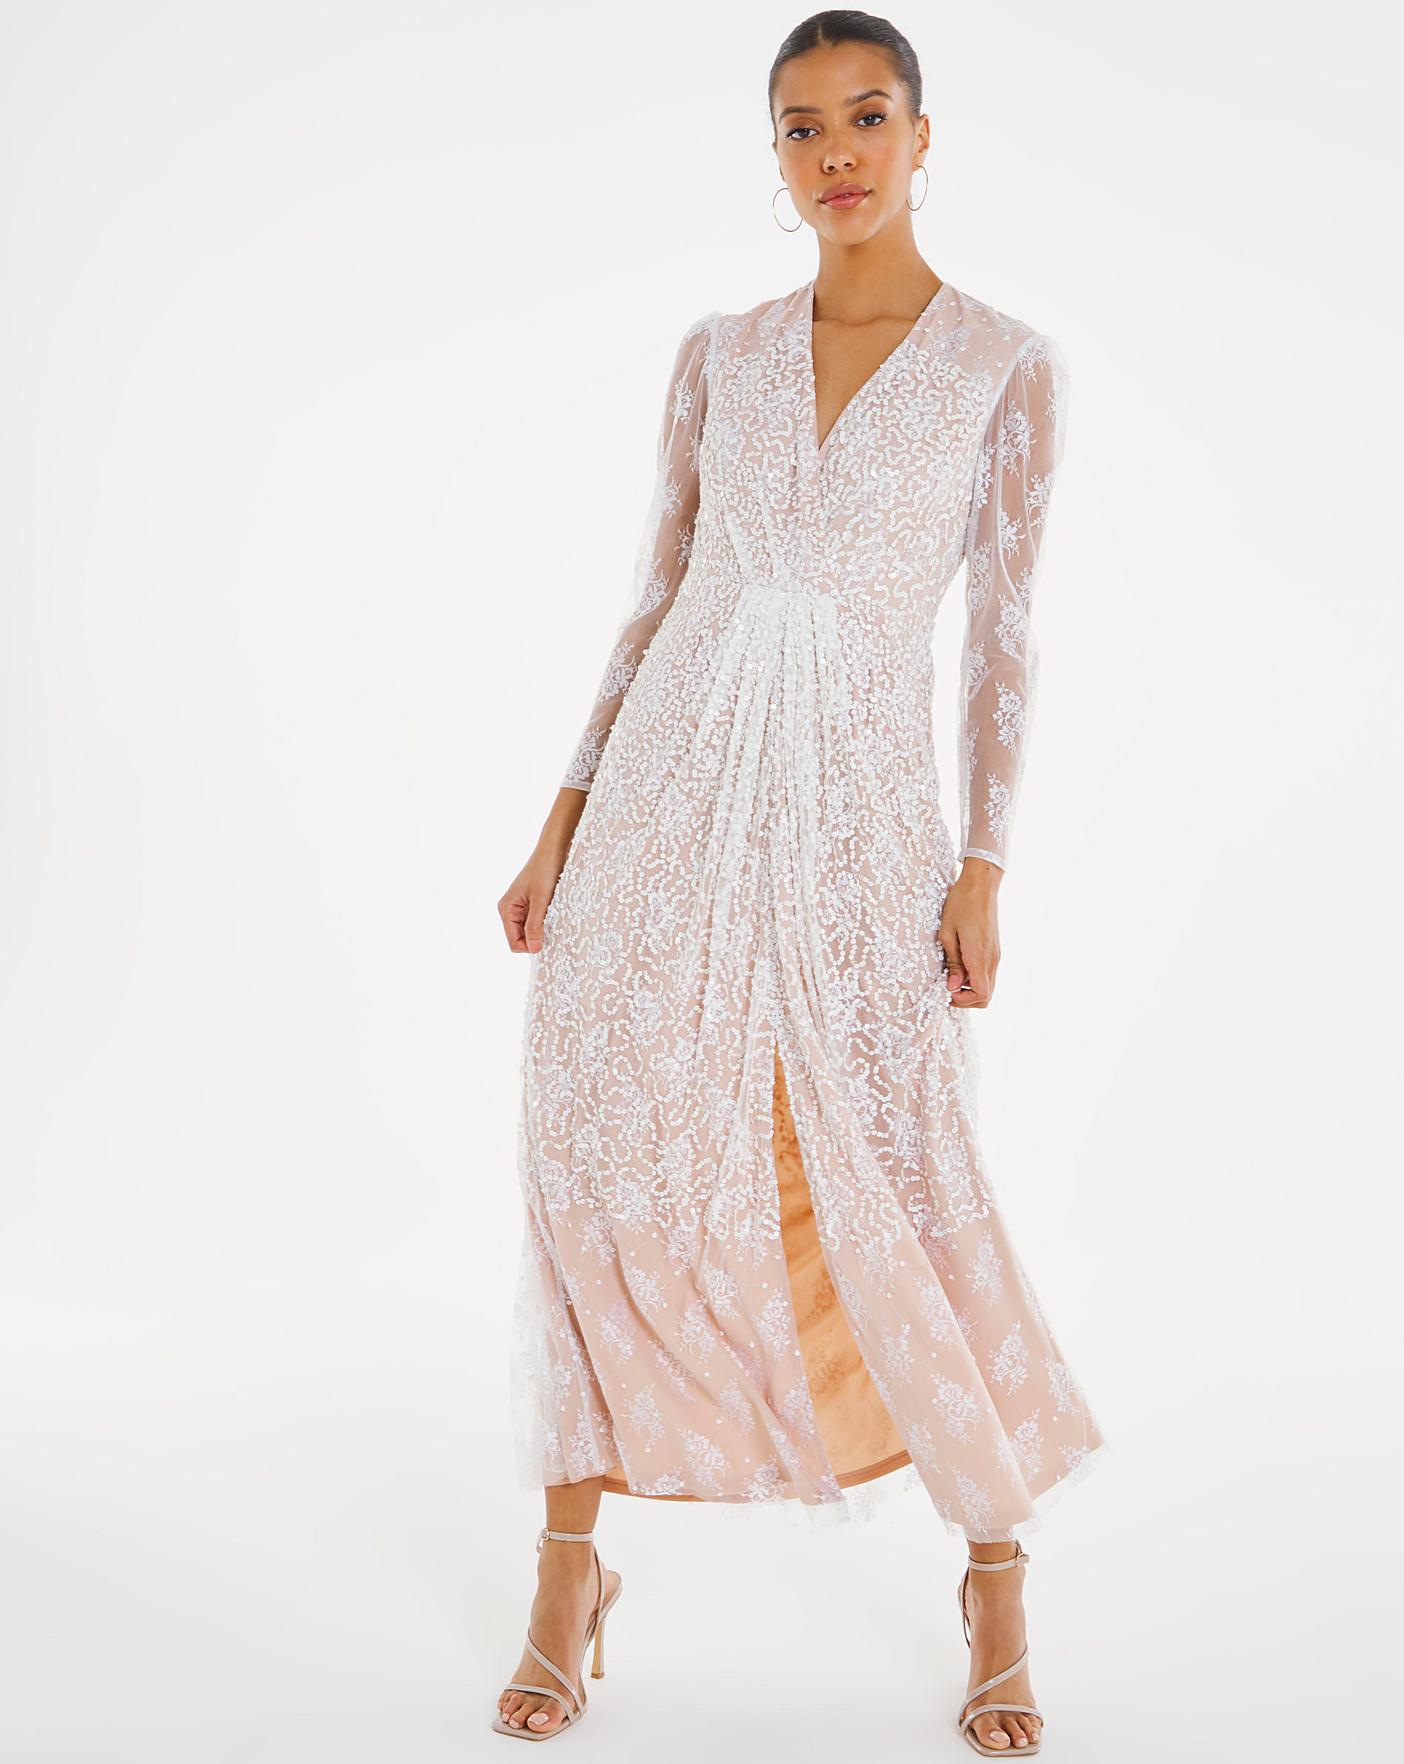 joanna hope wedding dresses | Dresses Images 2022